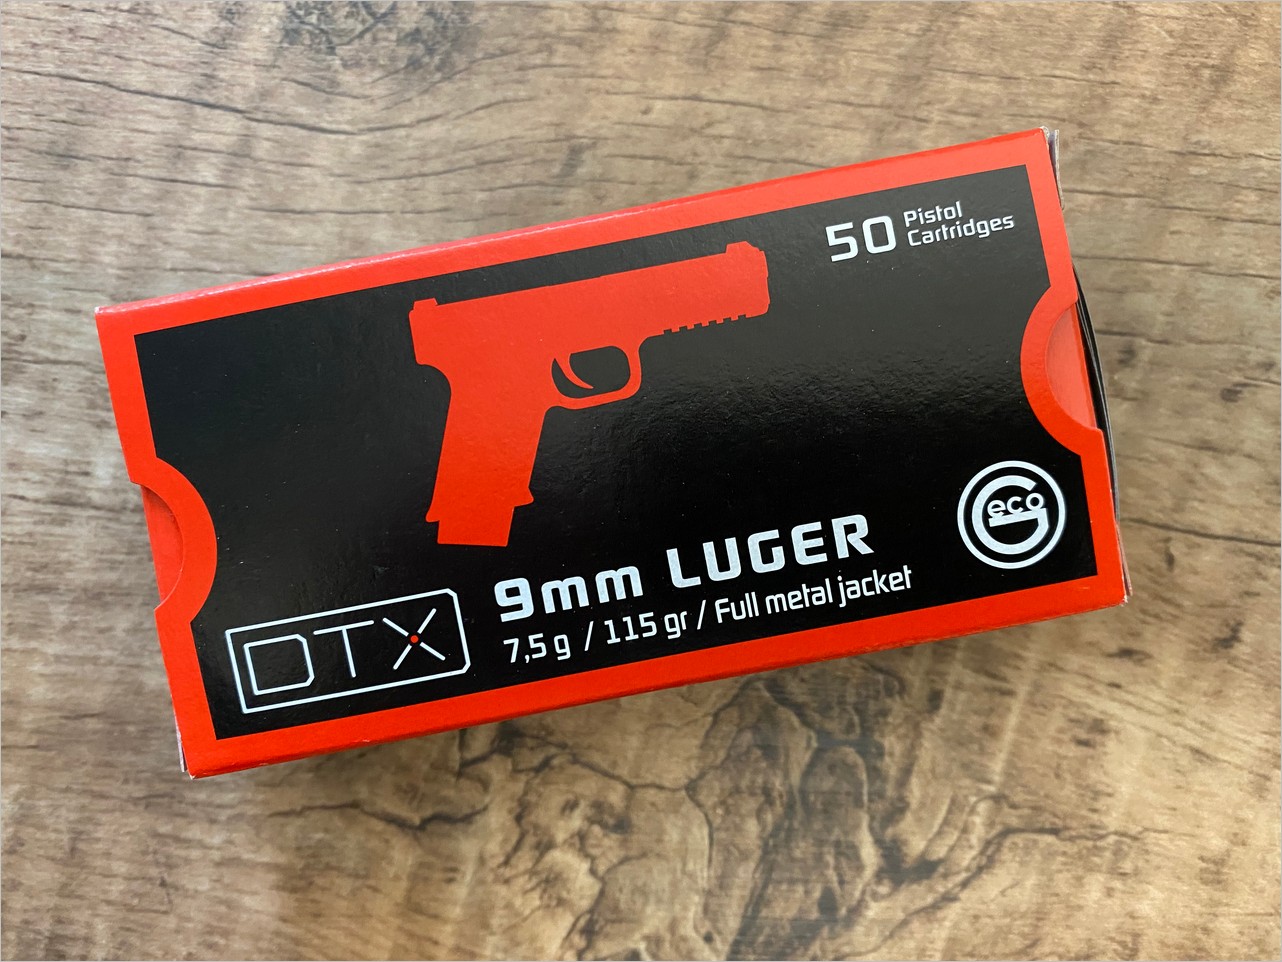 Geco DTX 9mm Luger